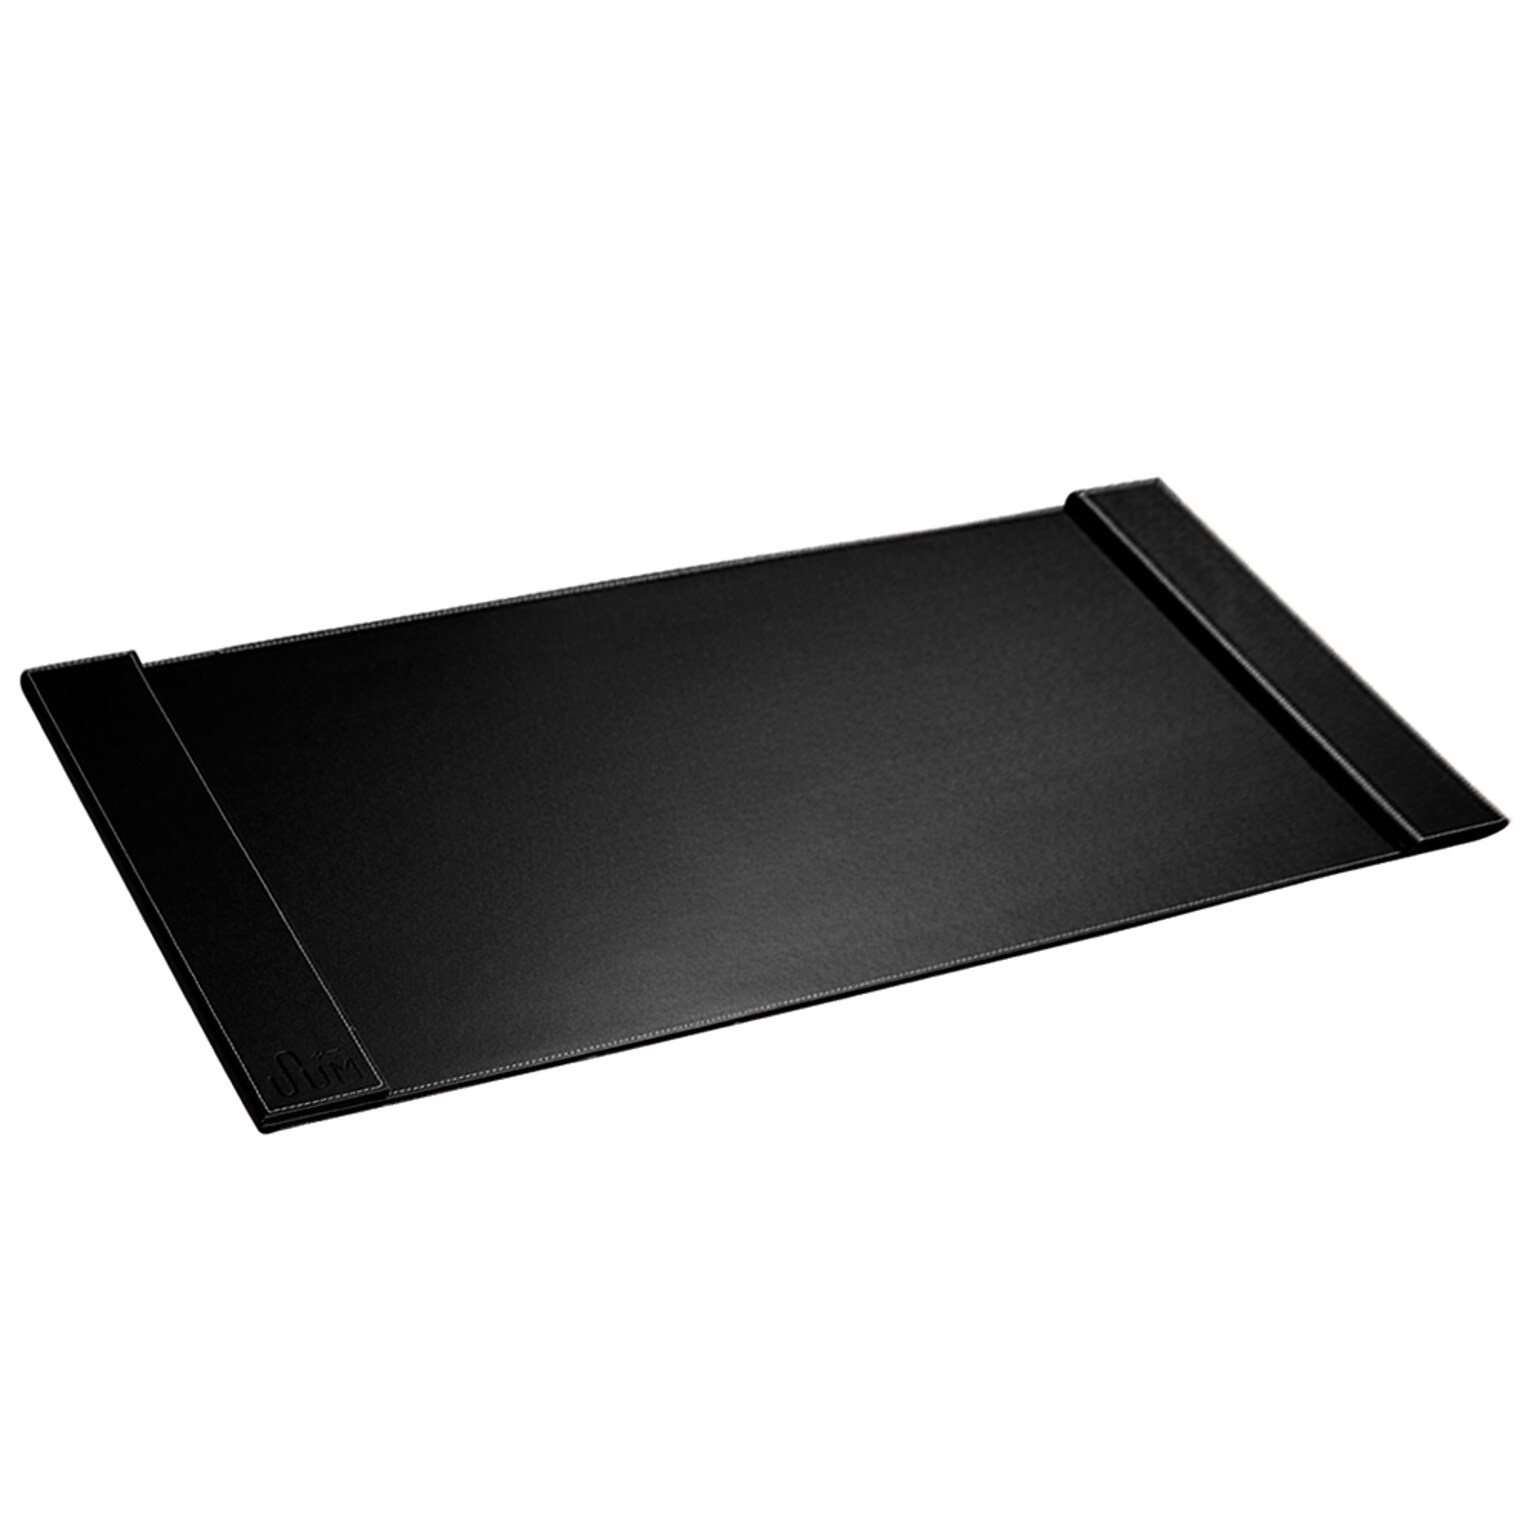 SUM Anti-Slip Wood Desk Pad with Side Rail, 34.5 x 24, Black (OSKDPD001)